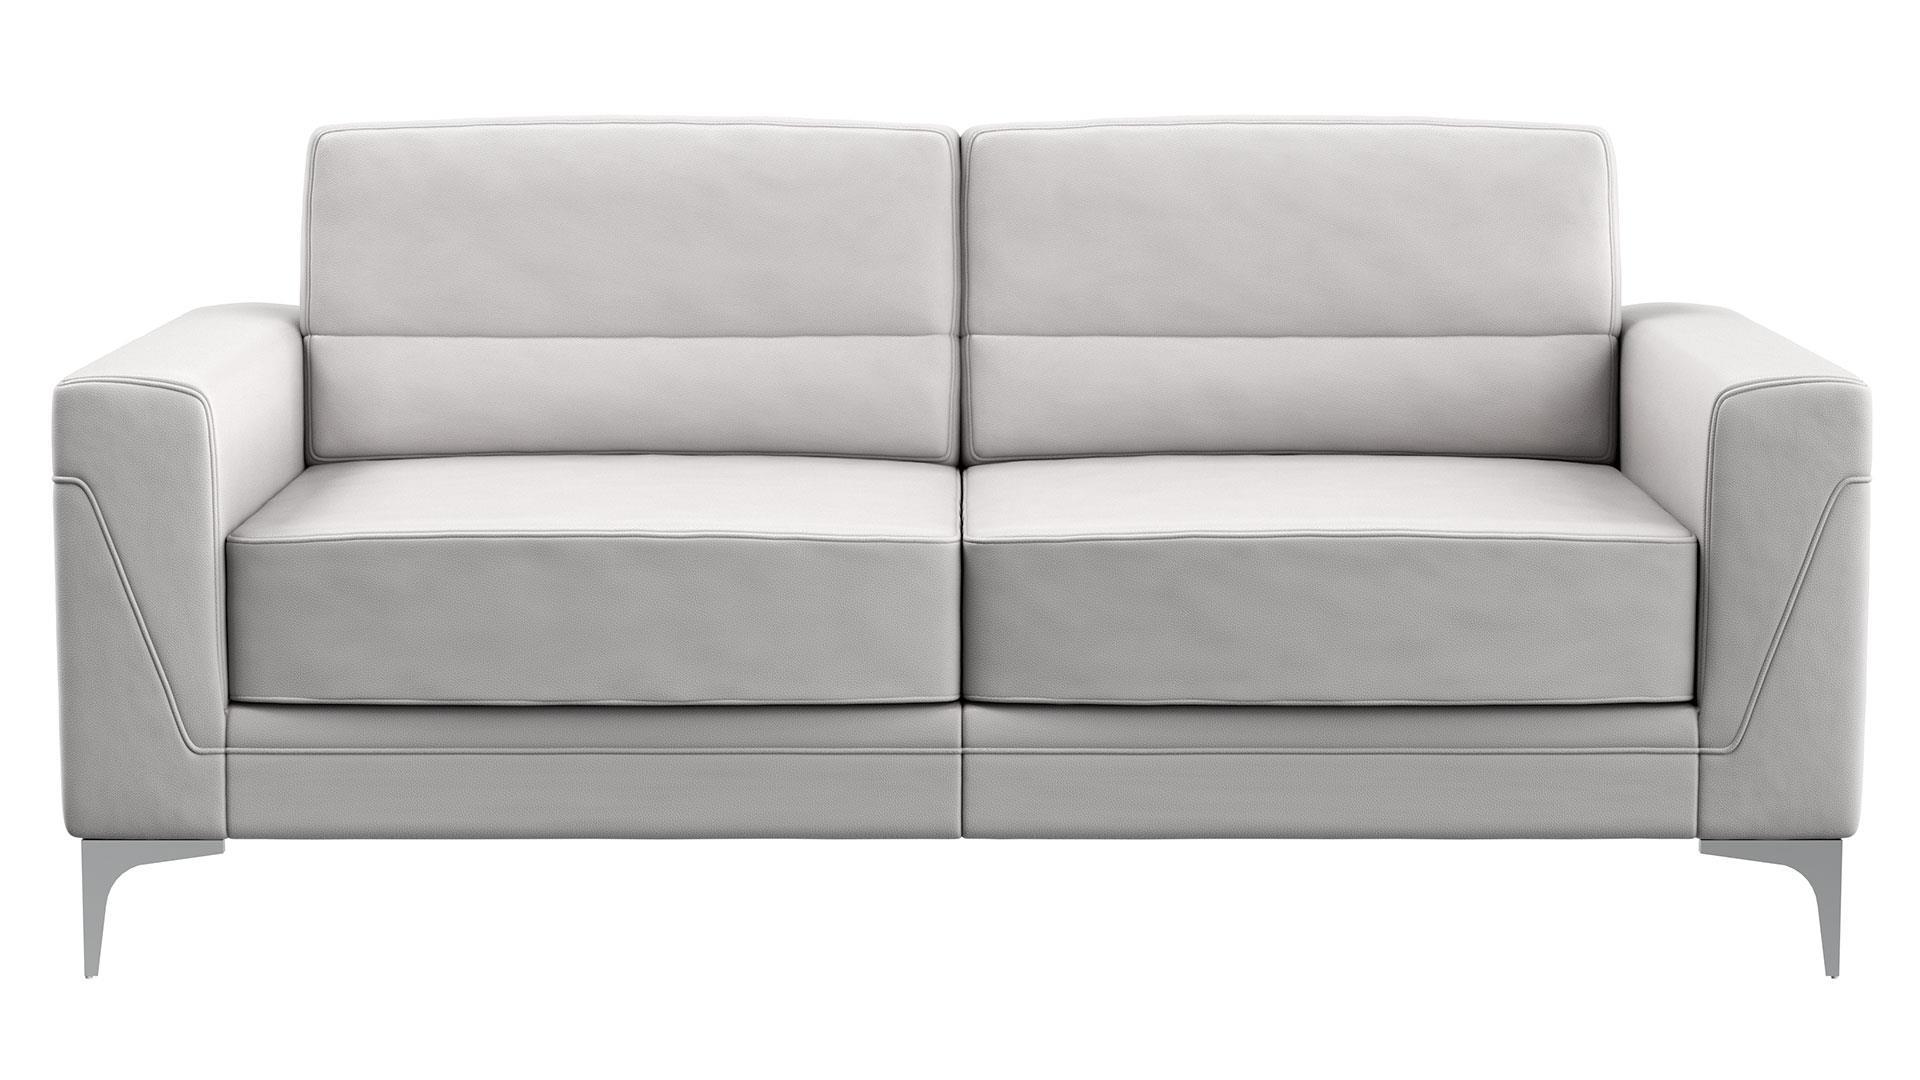 

    
U6109-S/L Global Furniture USA Sofa and Loveseat Set
